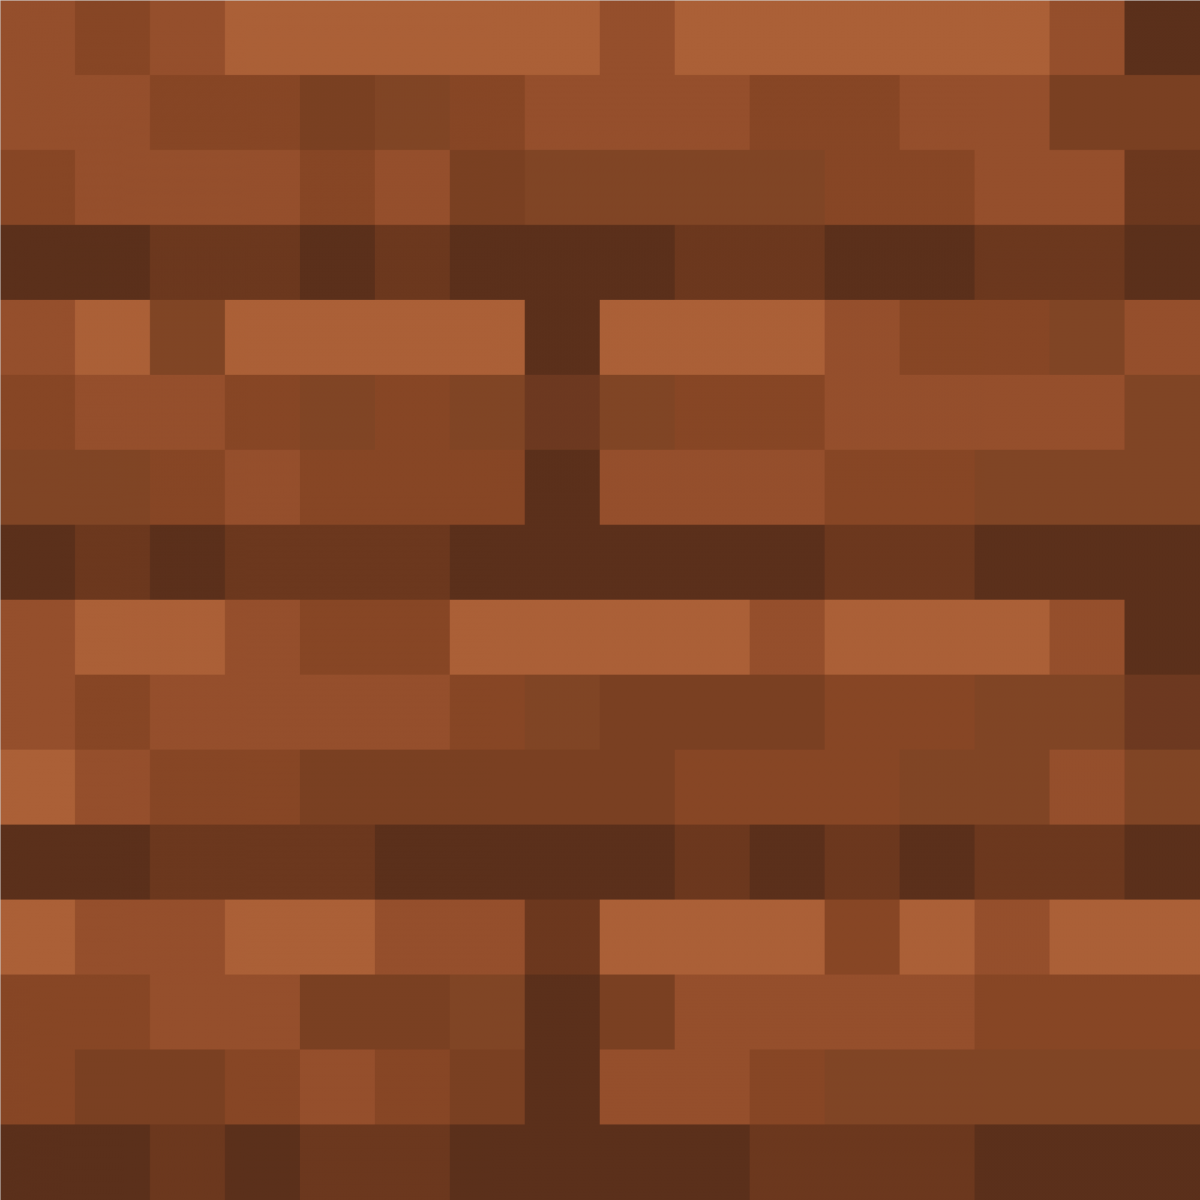 Minecraft textures 1.16 5. Майнкрафт блоки 2д базальт. Блок дерева майнкрафт 2д. Блок камня майнкрафт 2д. Блок майнкрафт 2д лава.